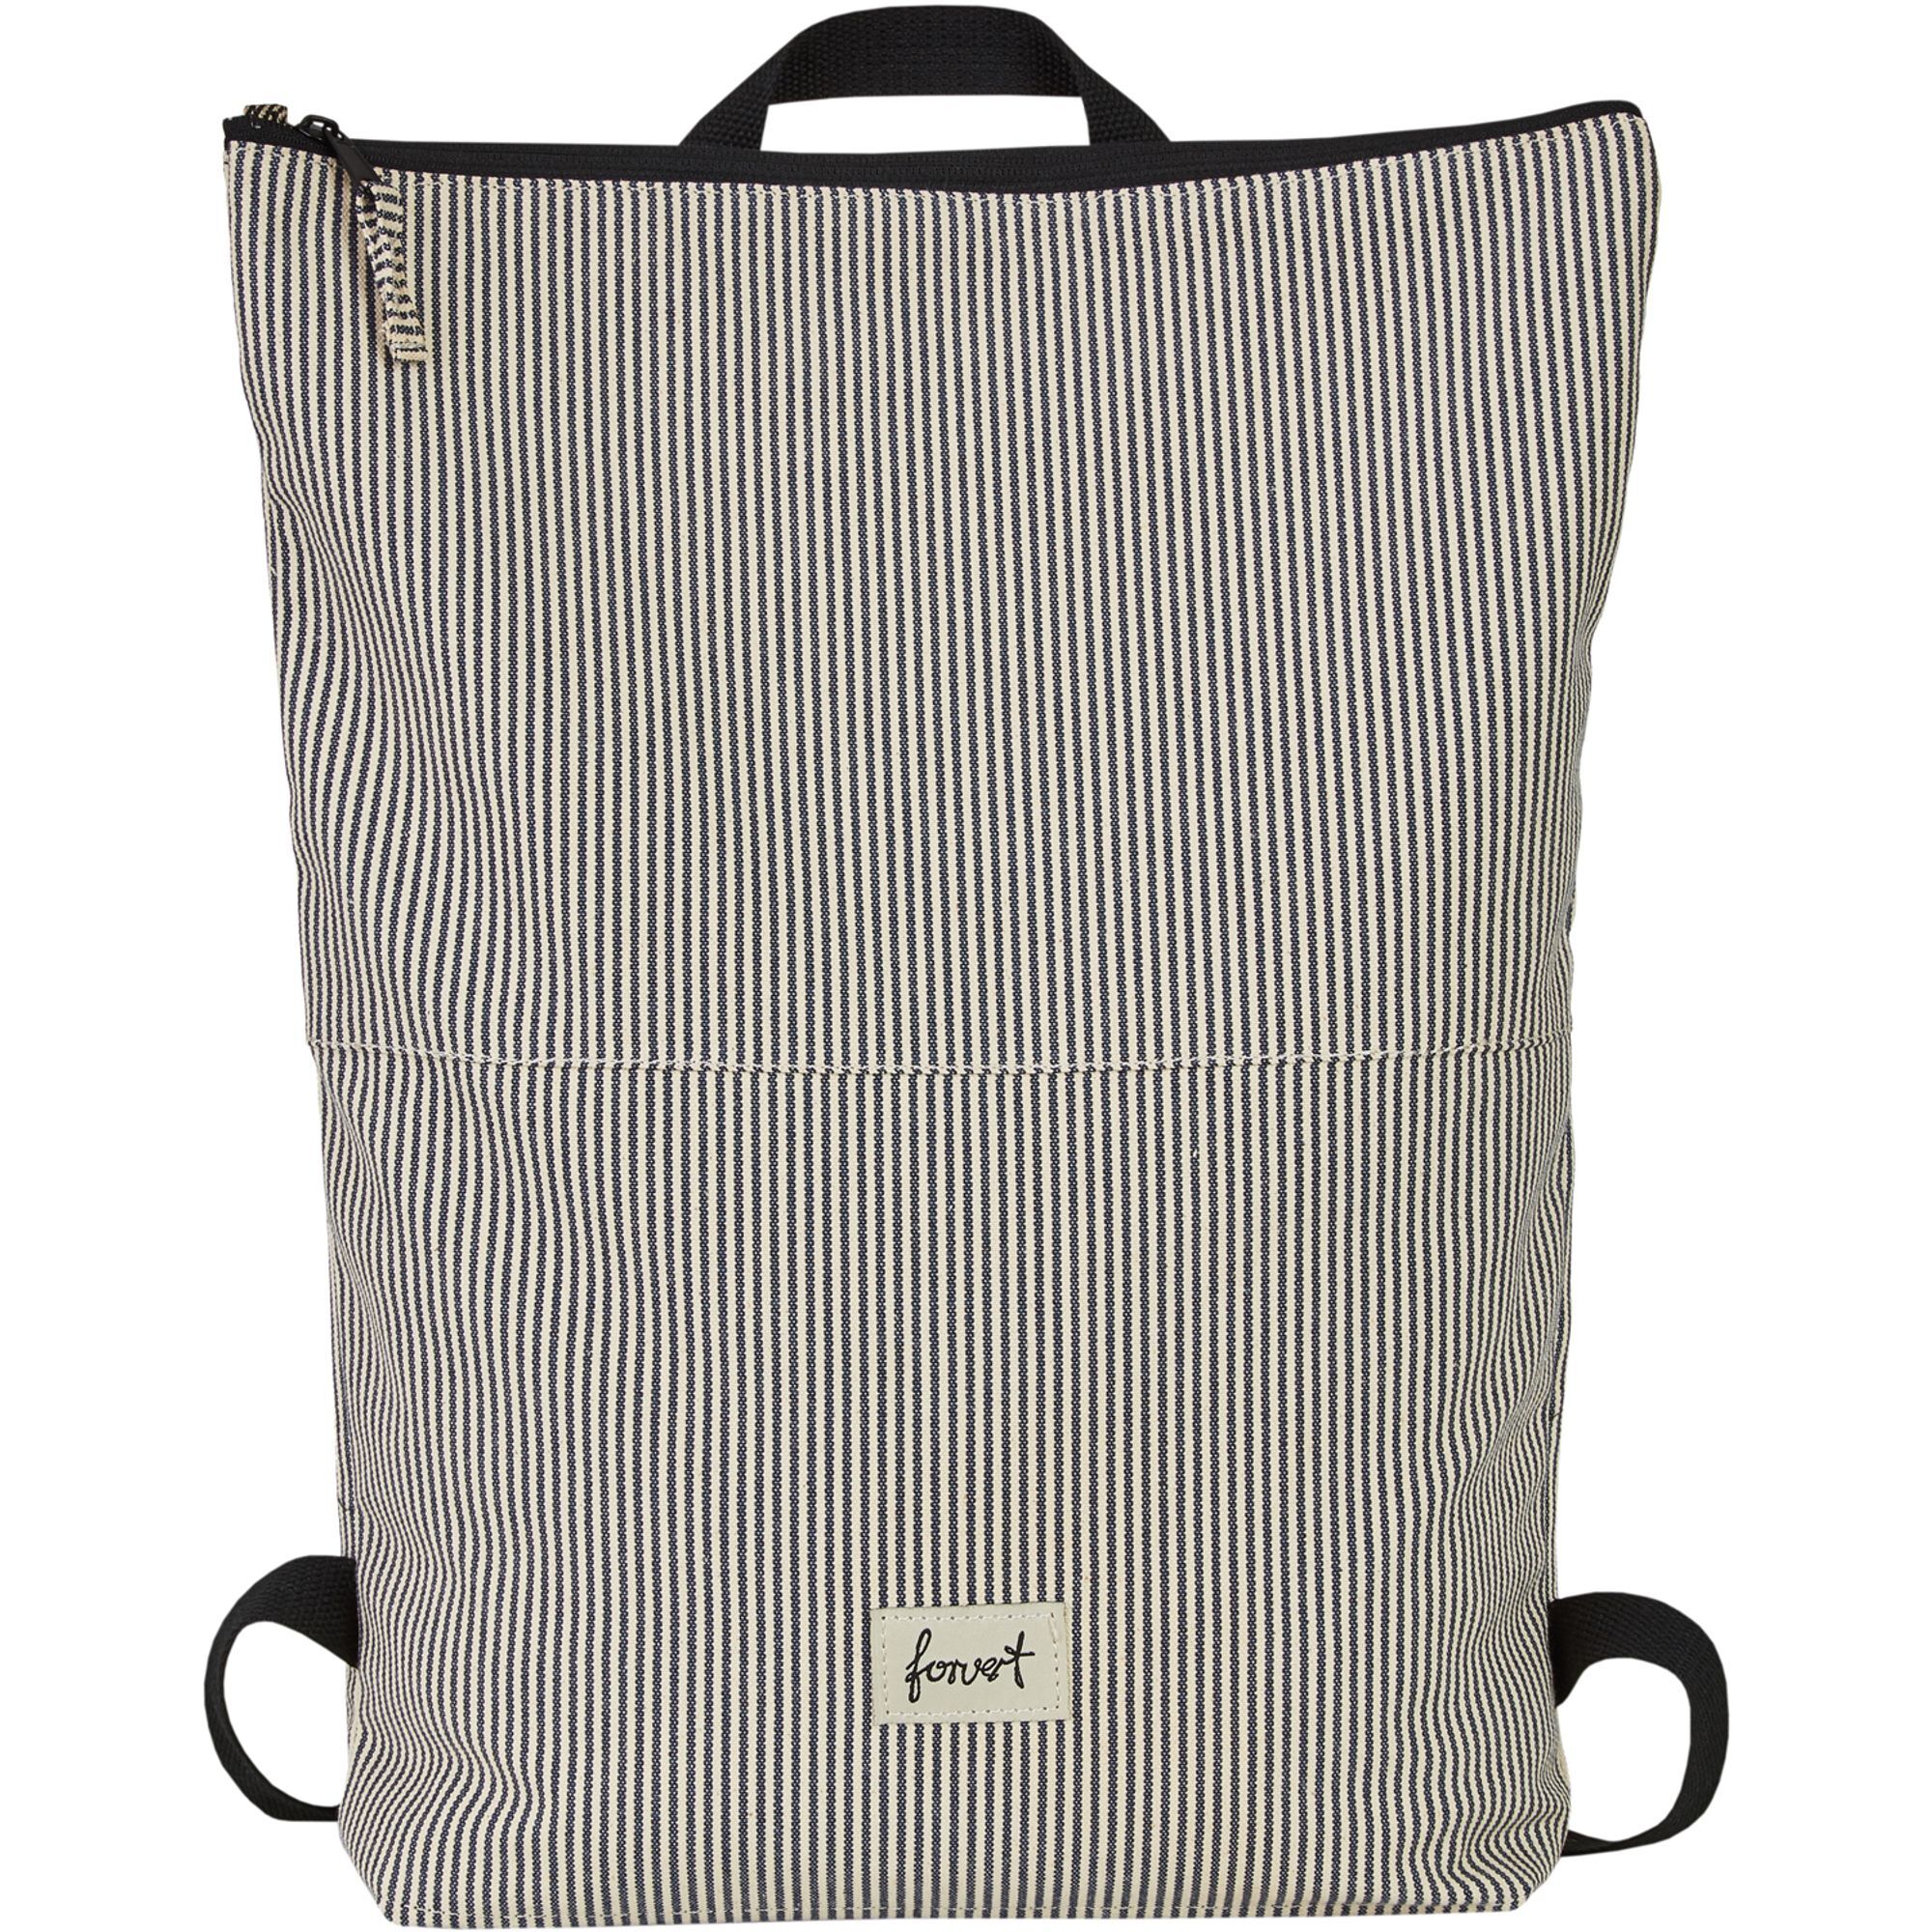 Рюкзак FORVERT Colin 45 cm Laptopfach, цвет striped рюкзак wenger trayl 45 cm laptopfach цвет gravity black